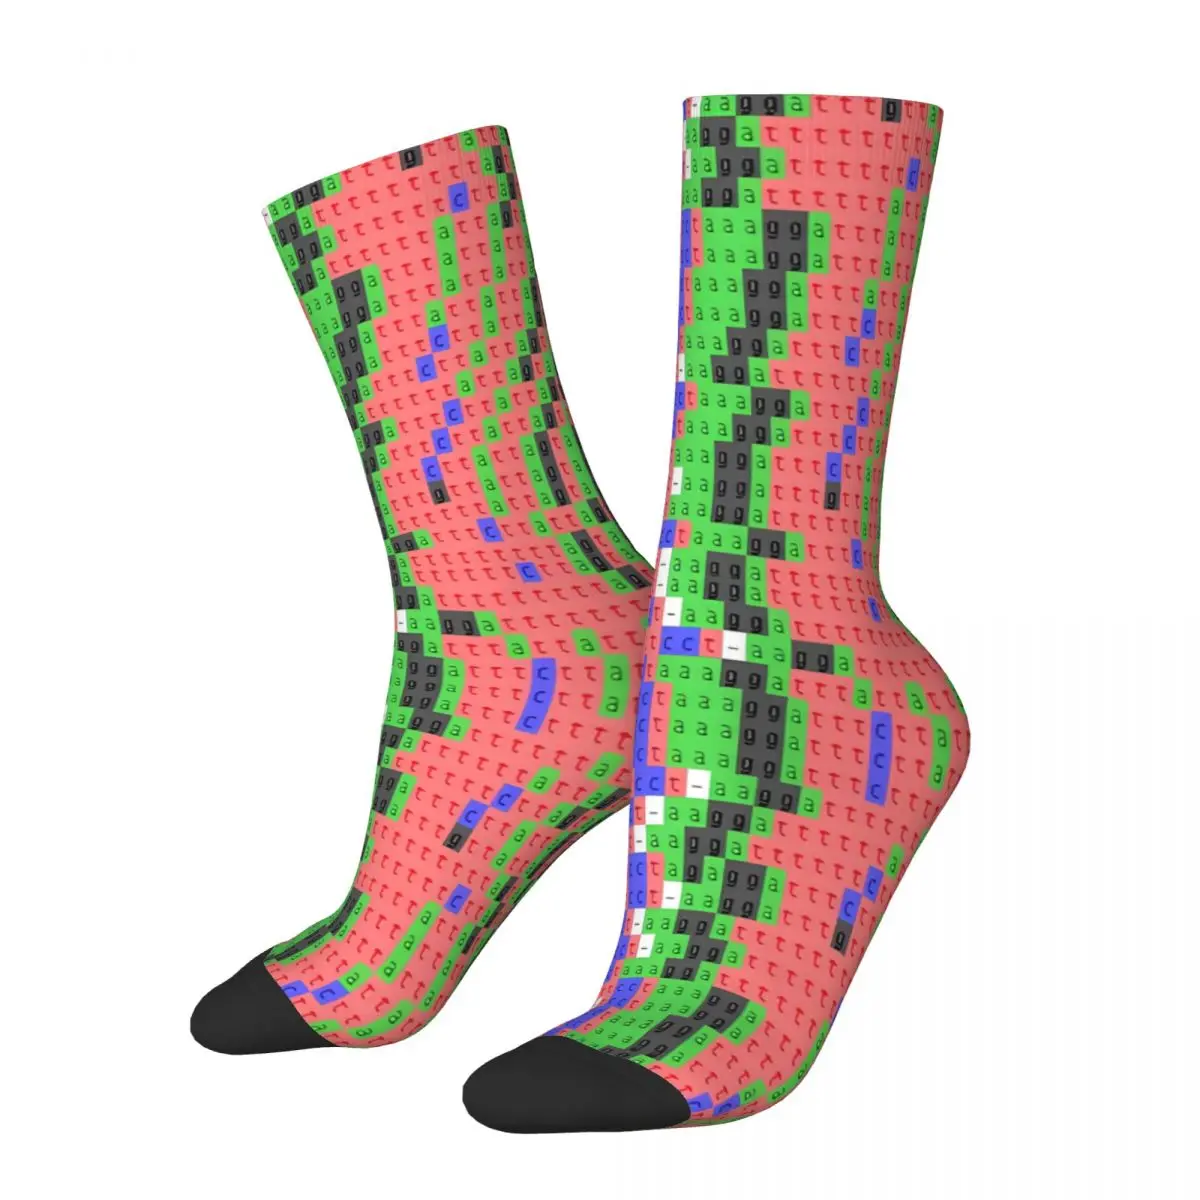 

Happy Men's Socks Sequence Pattern Vintage DNA Genetics Hip Hop Crazy Crew Sock Gift Pattern Printed